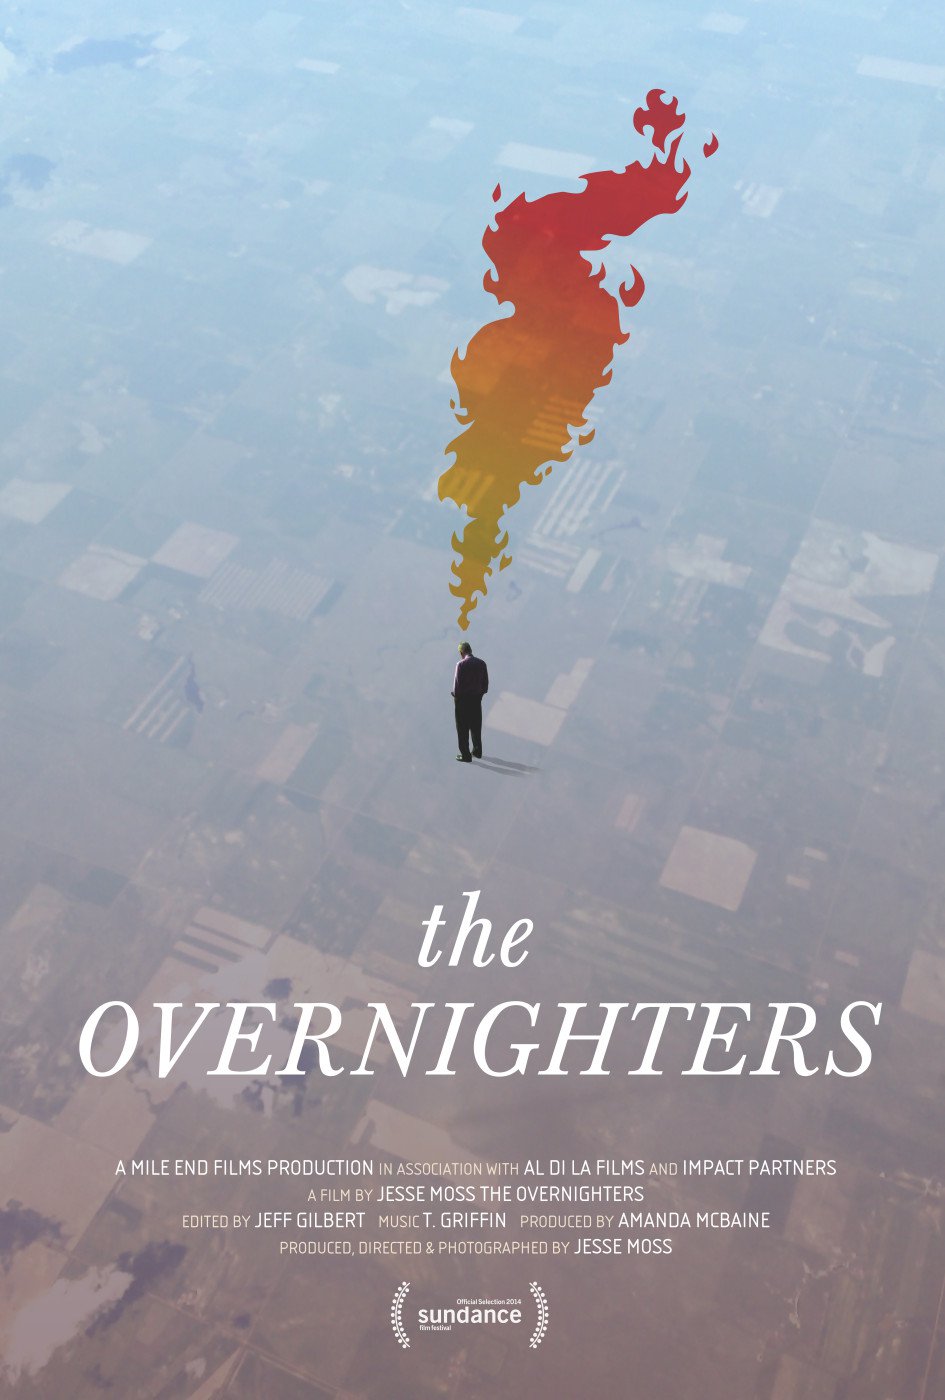 ‘The Overnighters’ Film screening